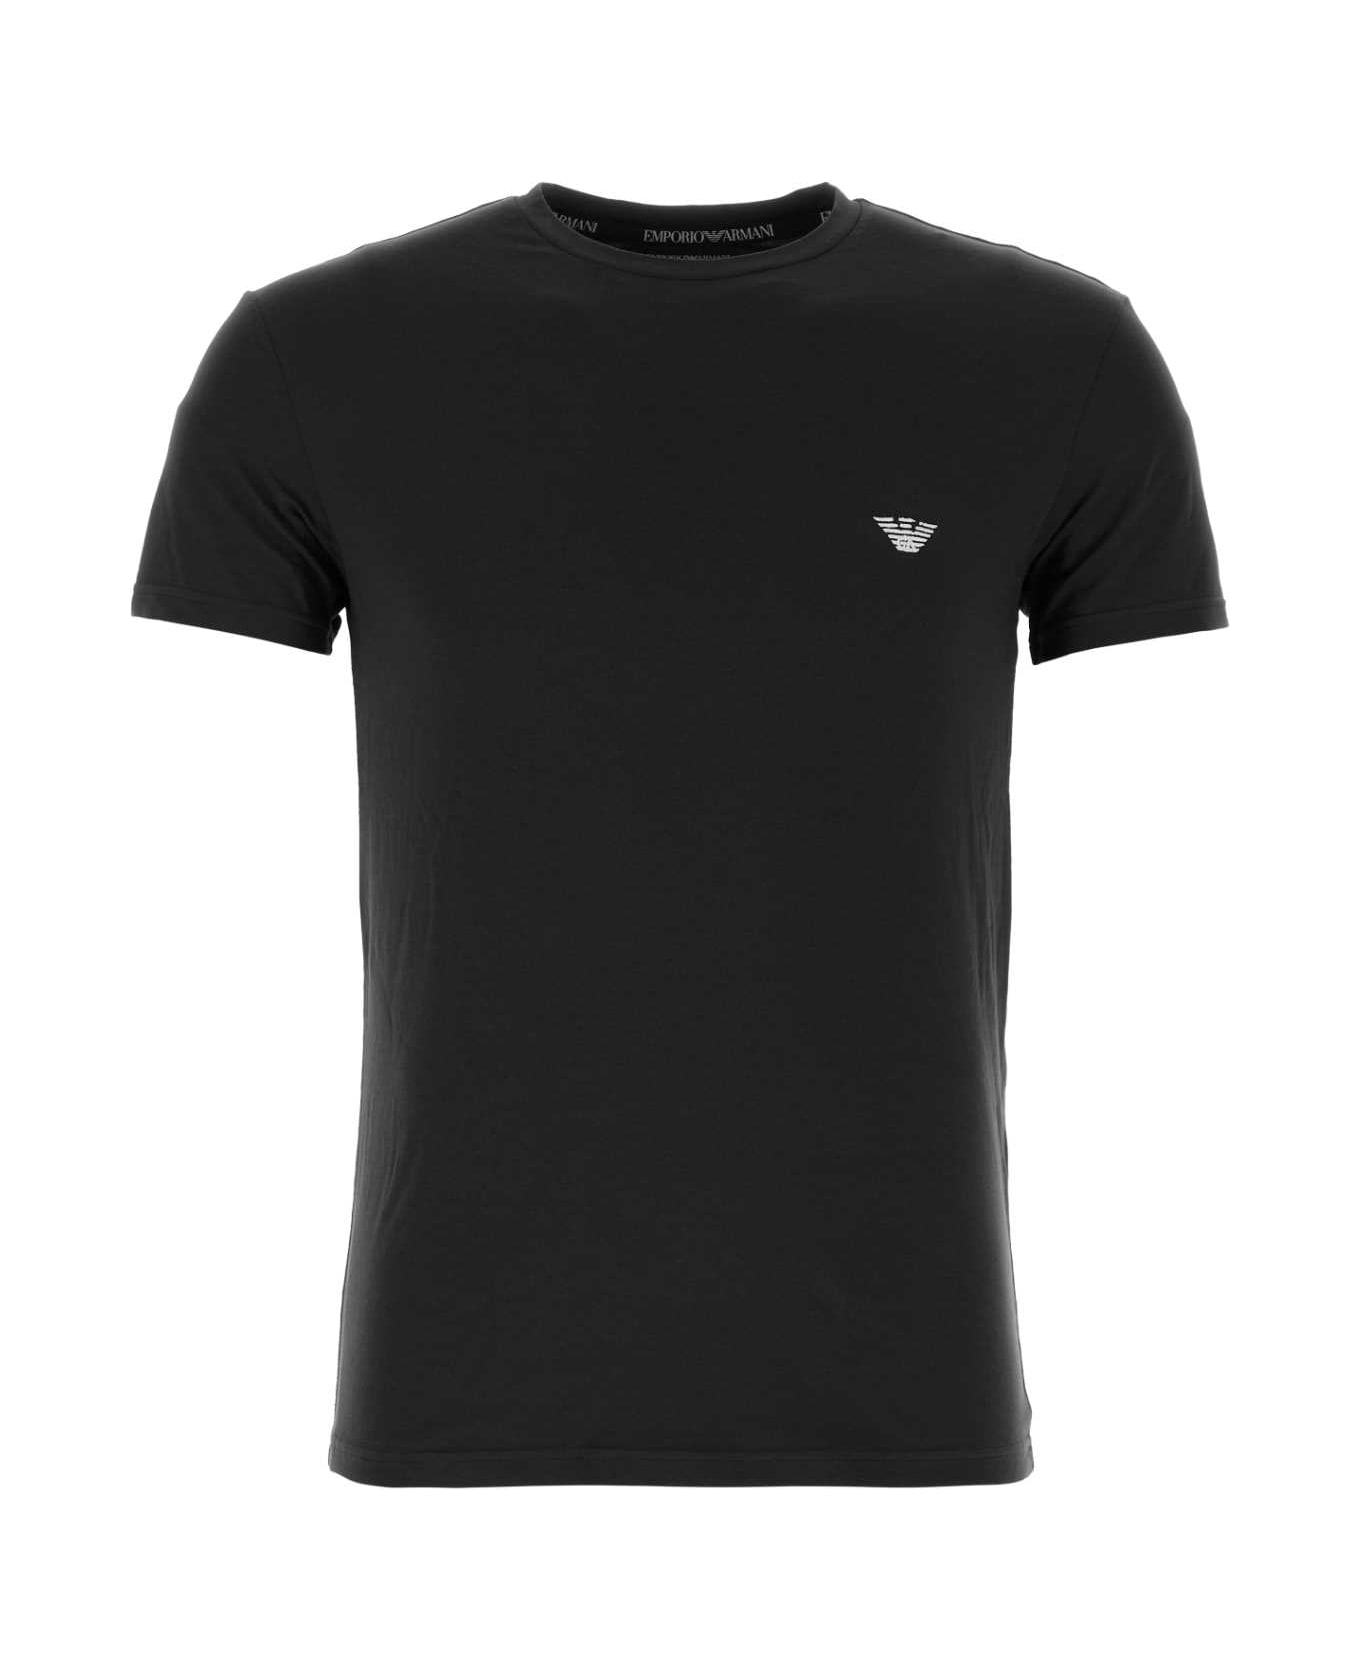 Emporio Armani Black Stretch Cotton T-shirt - 00020